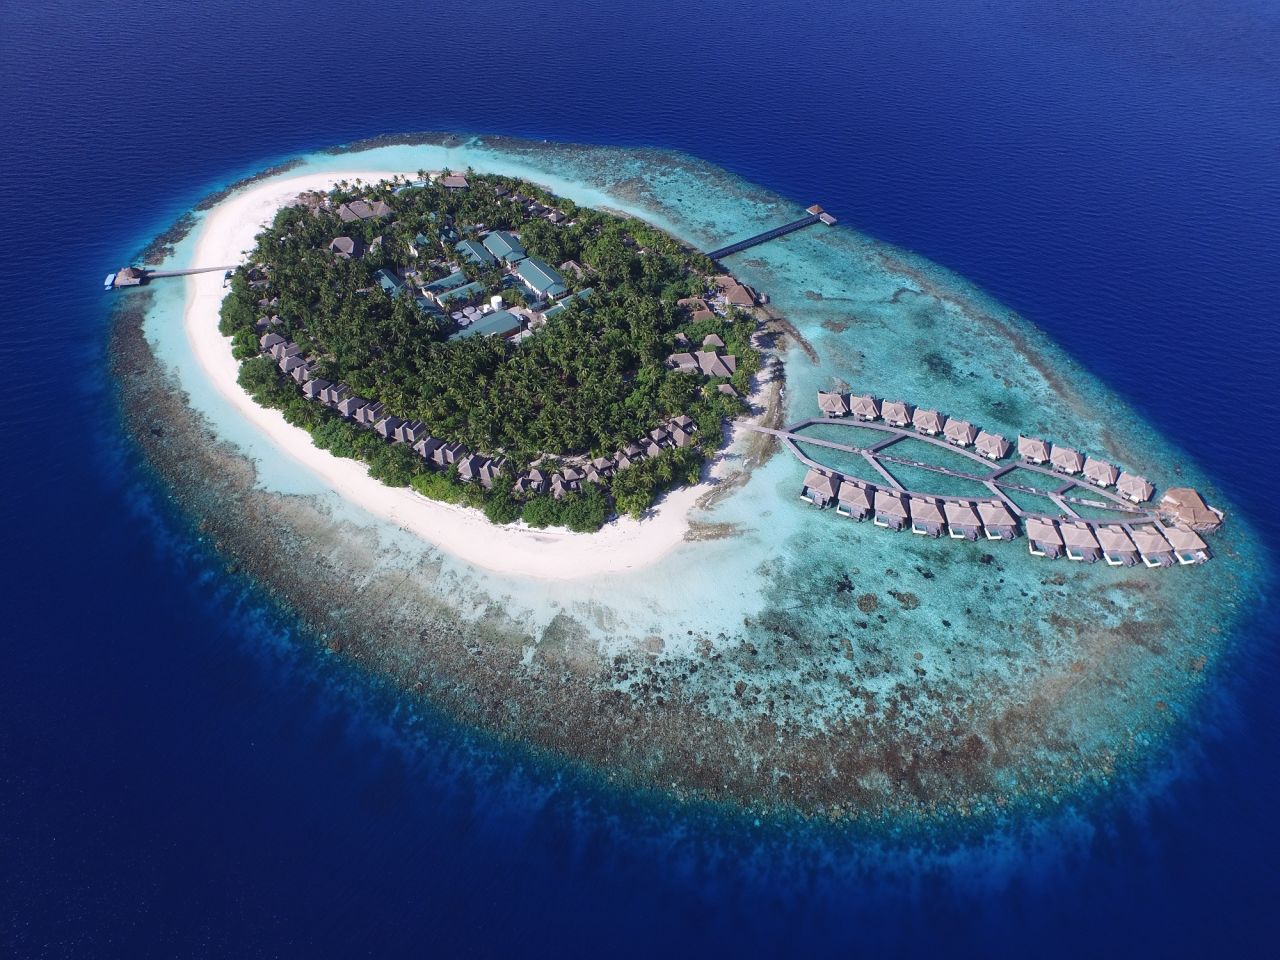 The Outrigger Konotta Maldives Resort is located in the Gaafu Dhaalu atoll. 